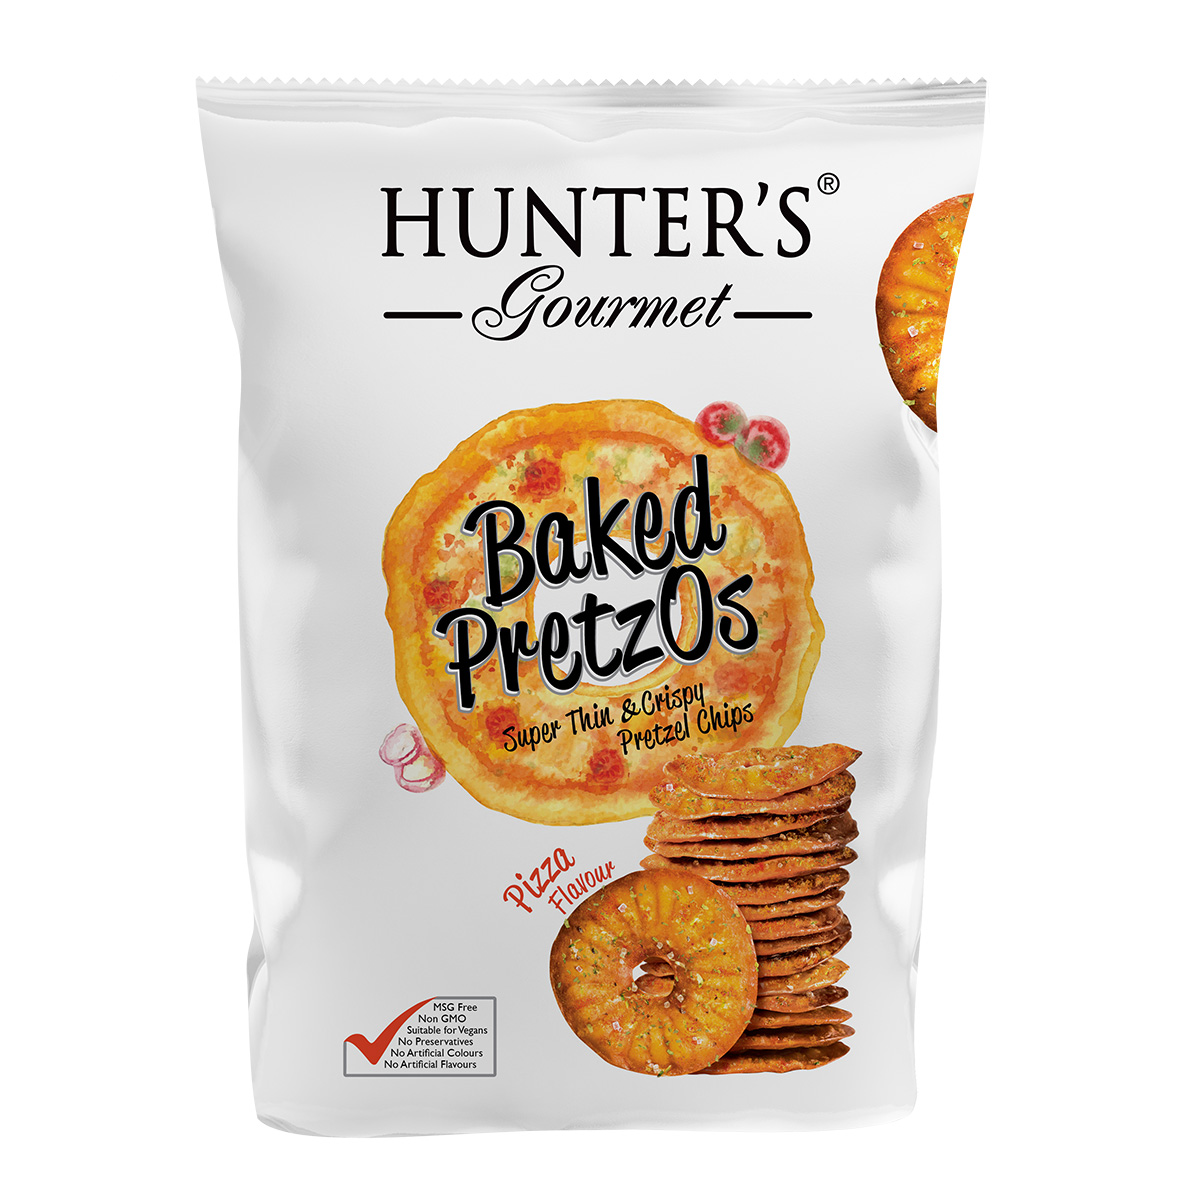 Hunter’s Gourmet Baked PretzOs with Black & White Sesame Seeds (80gm)